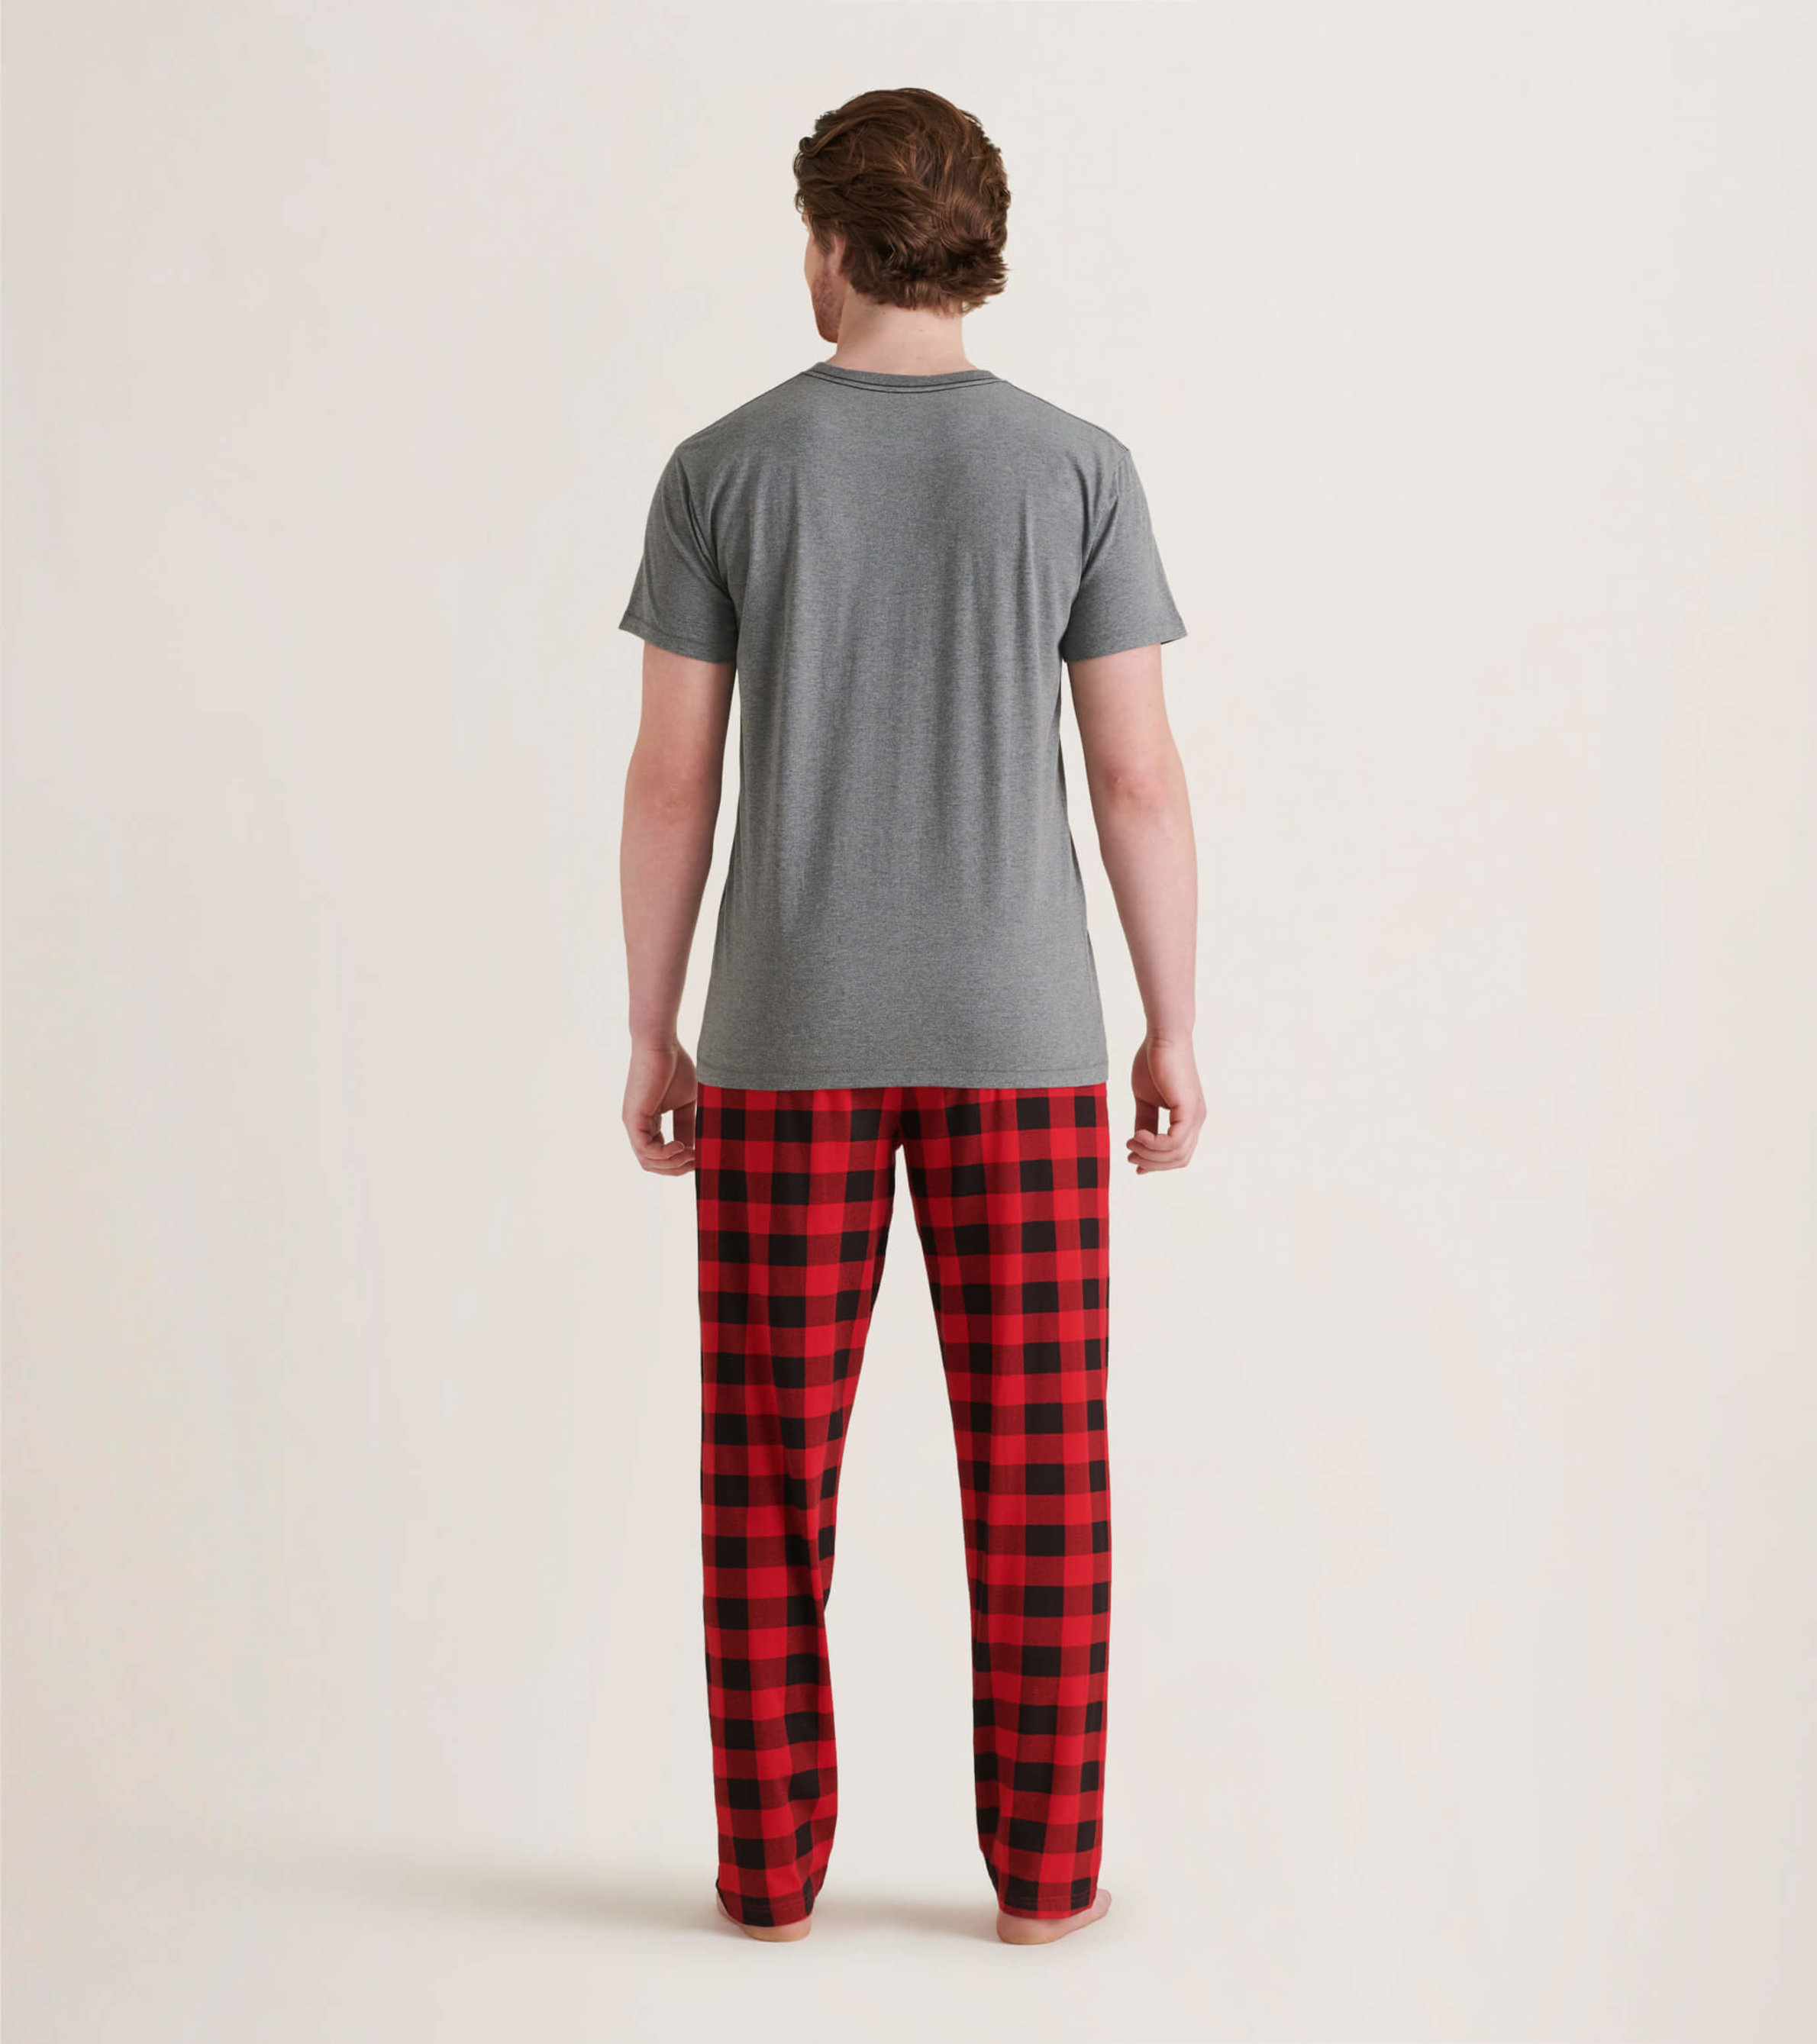 Polo Ralph Lauren Tartan Plaid Pajama Pants Flannel Red Green | Etsy | Plaid  pajamas, Flannel pajama pants, Tartan plaid